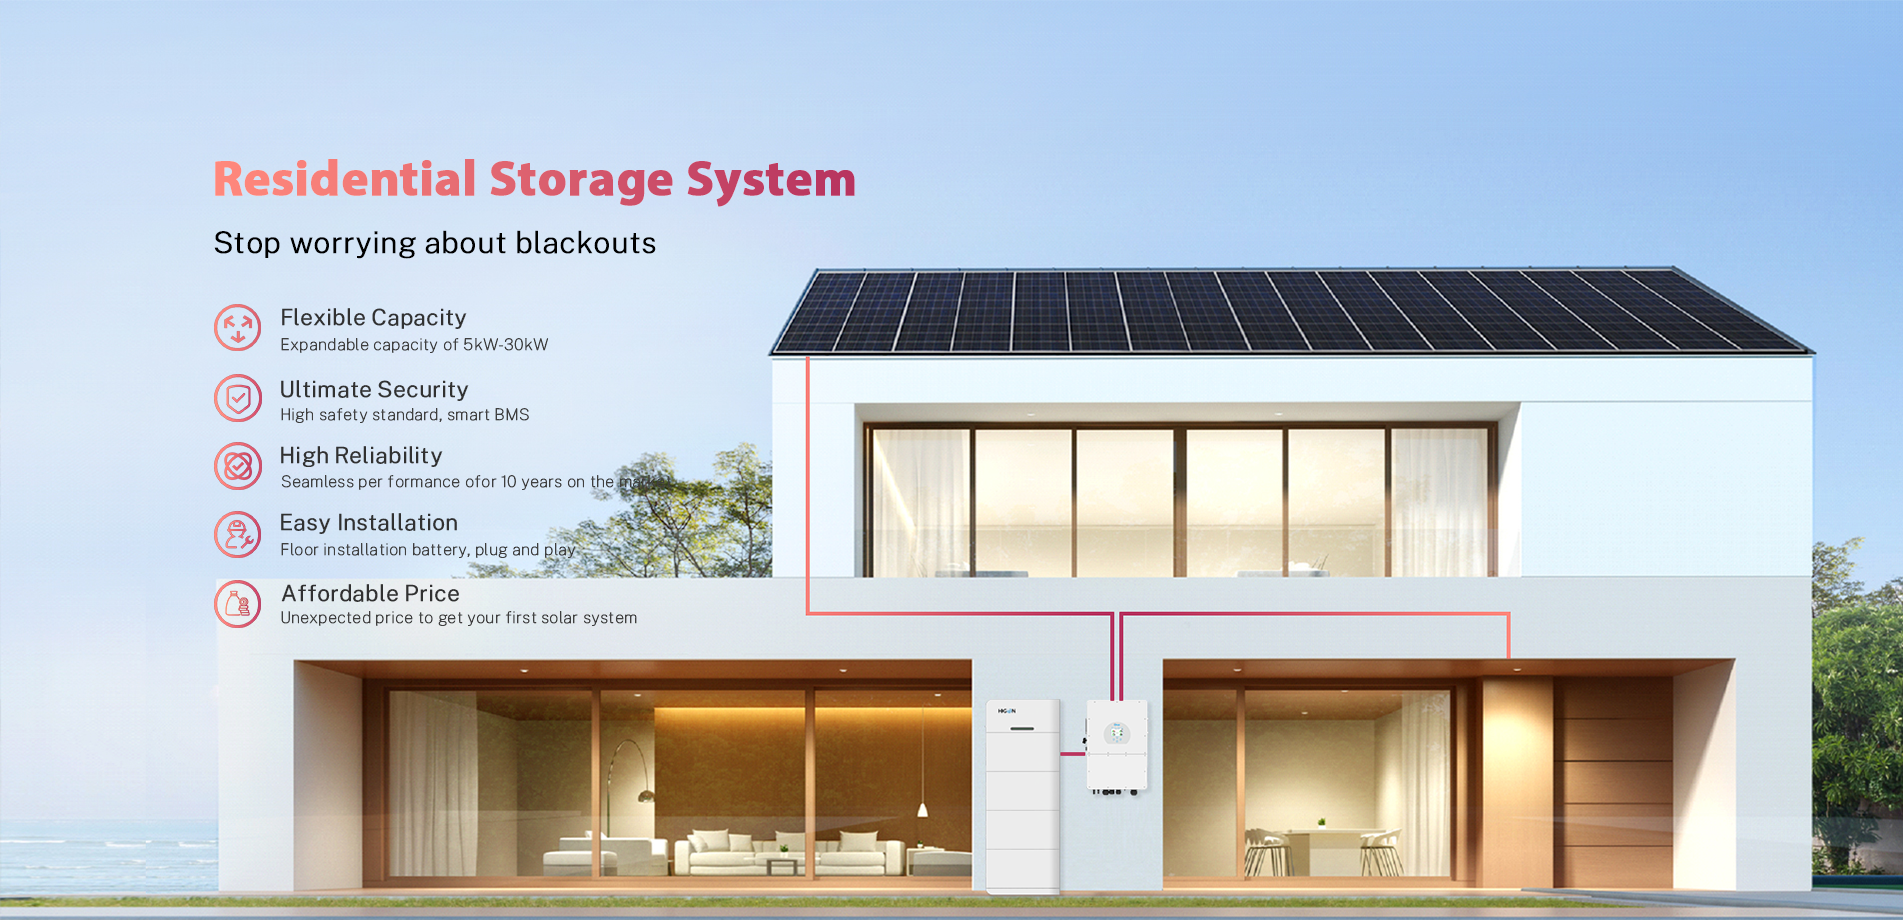 Residential Storage System